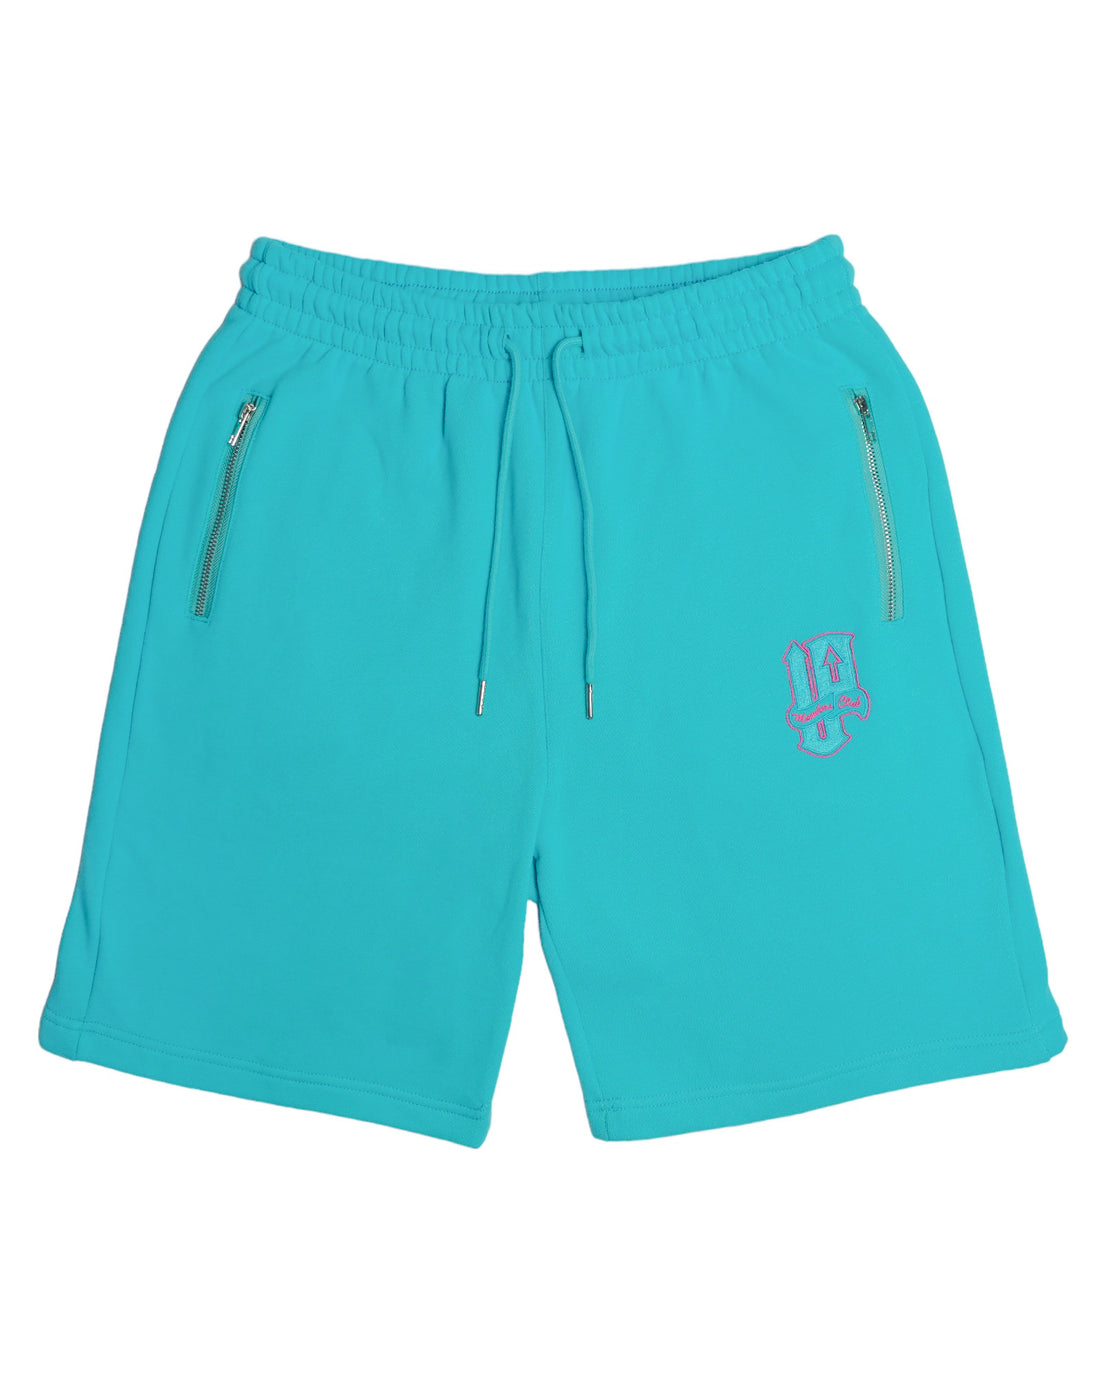 Aquamarine Blue Shorts